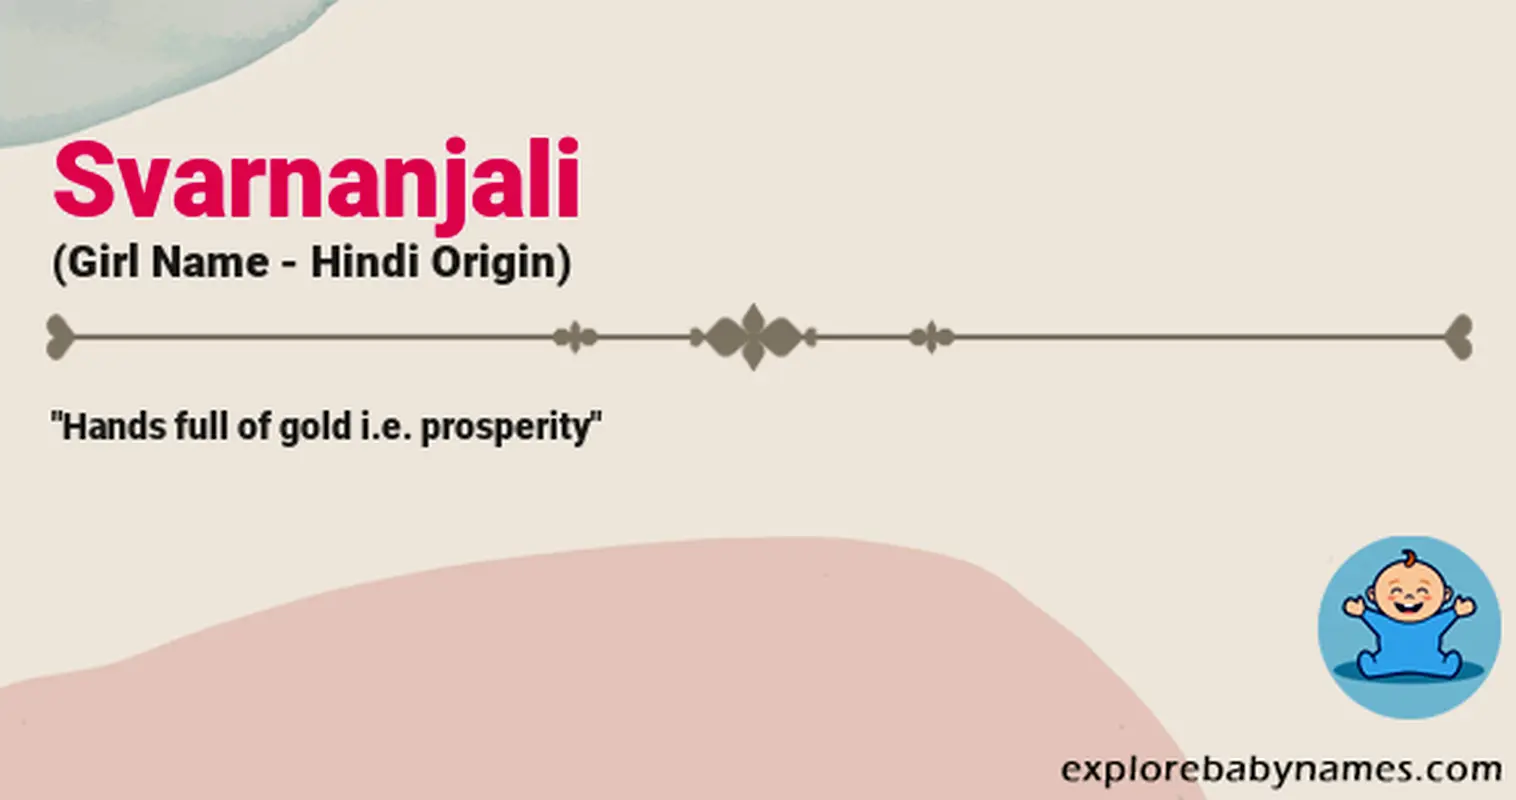 Meaning of Svarnanjali